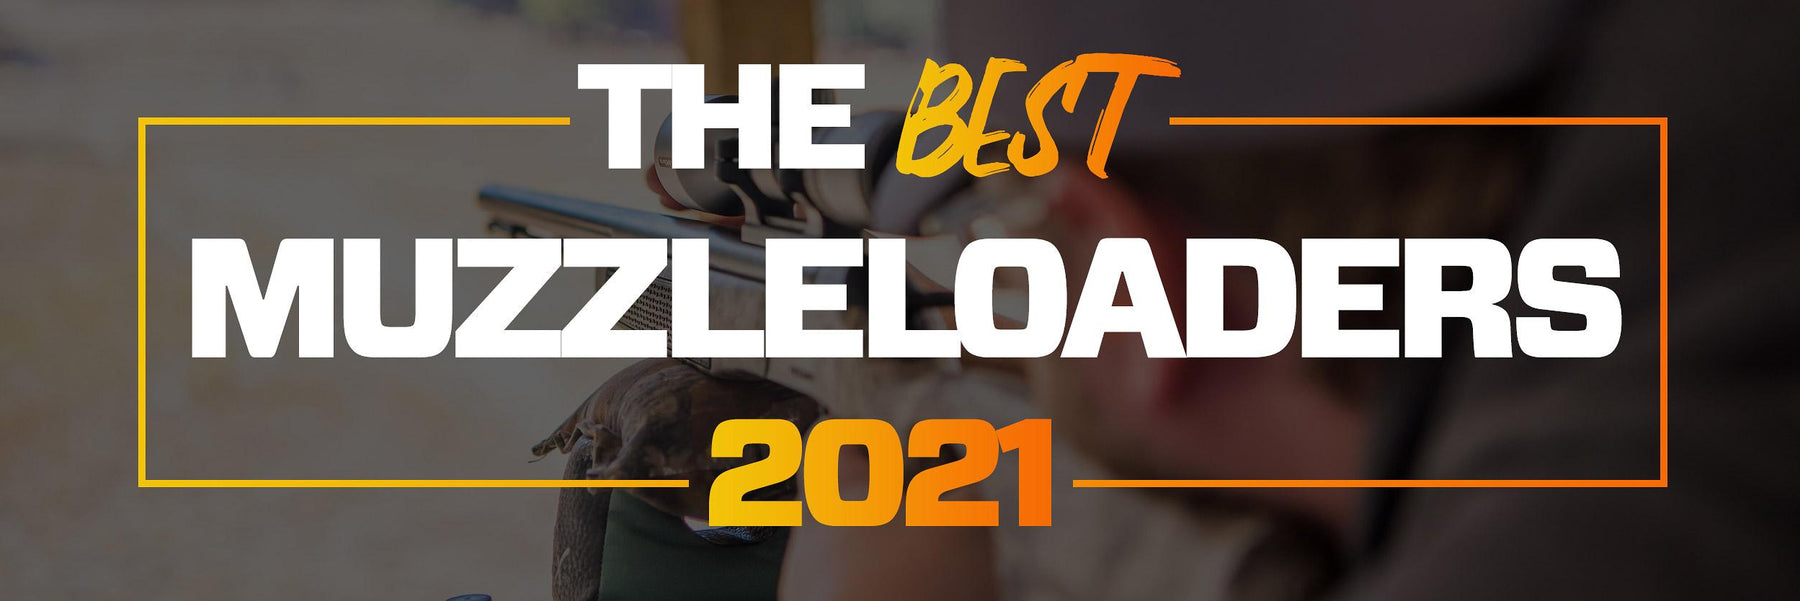 Best Muzzleloaders for 2021